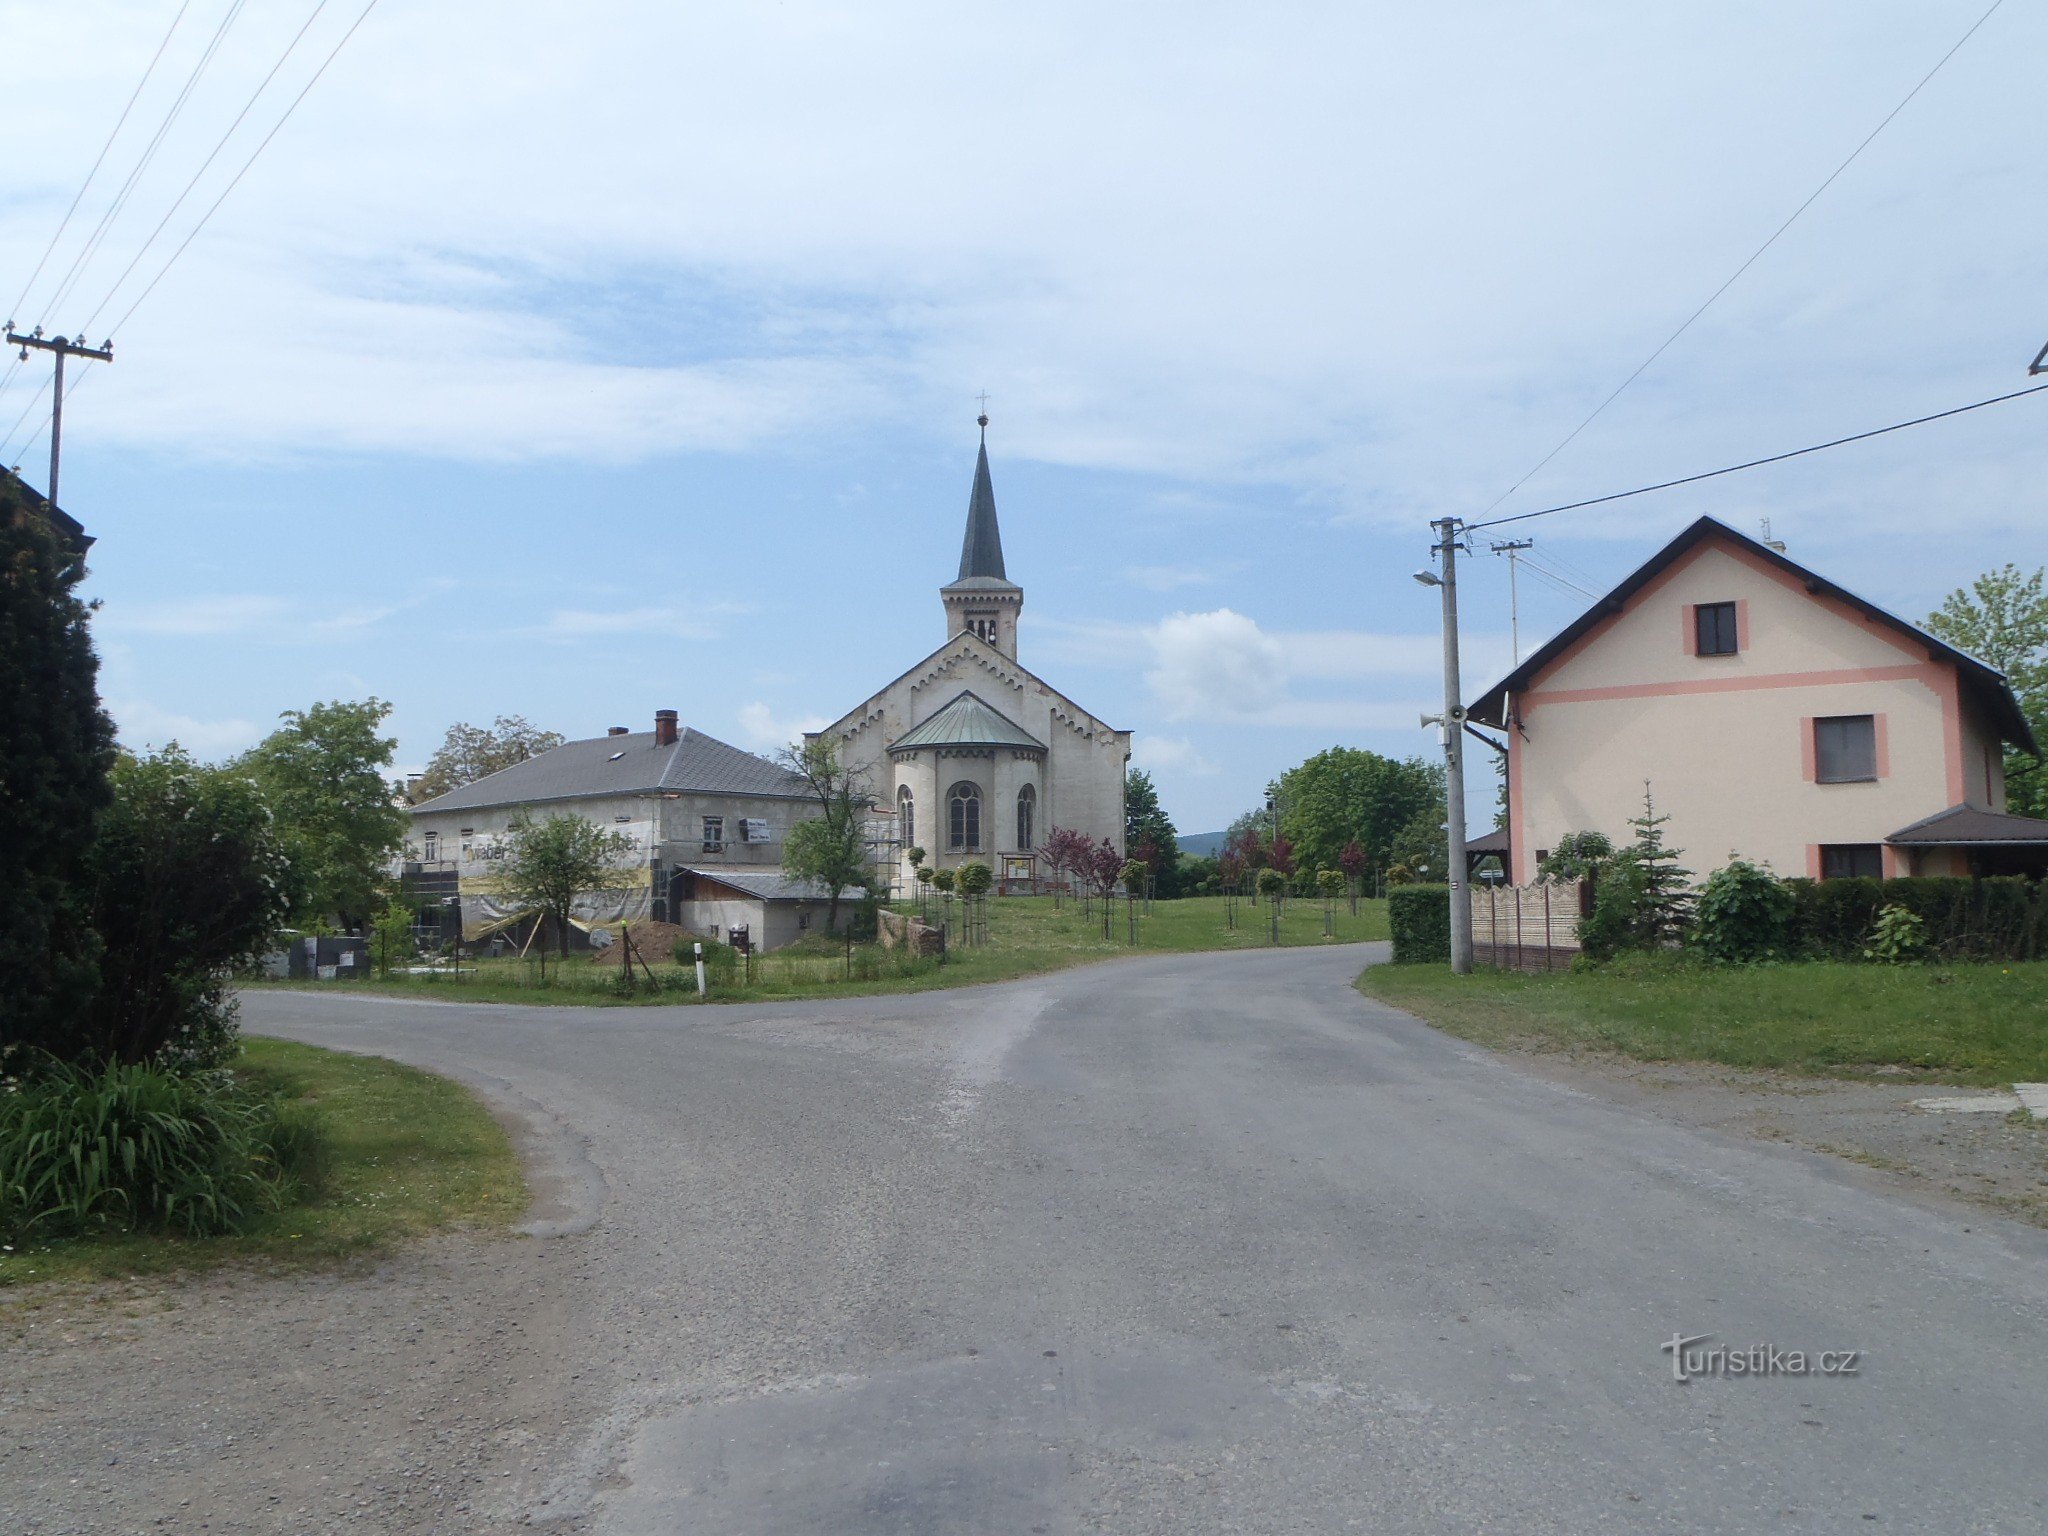 Igreja à distância